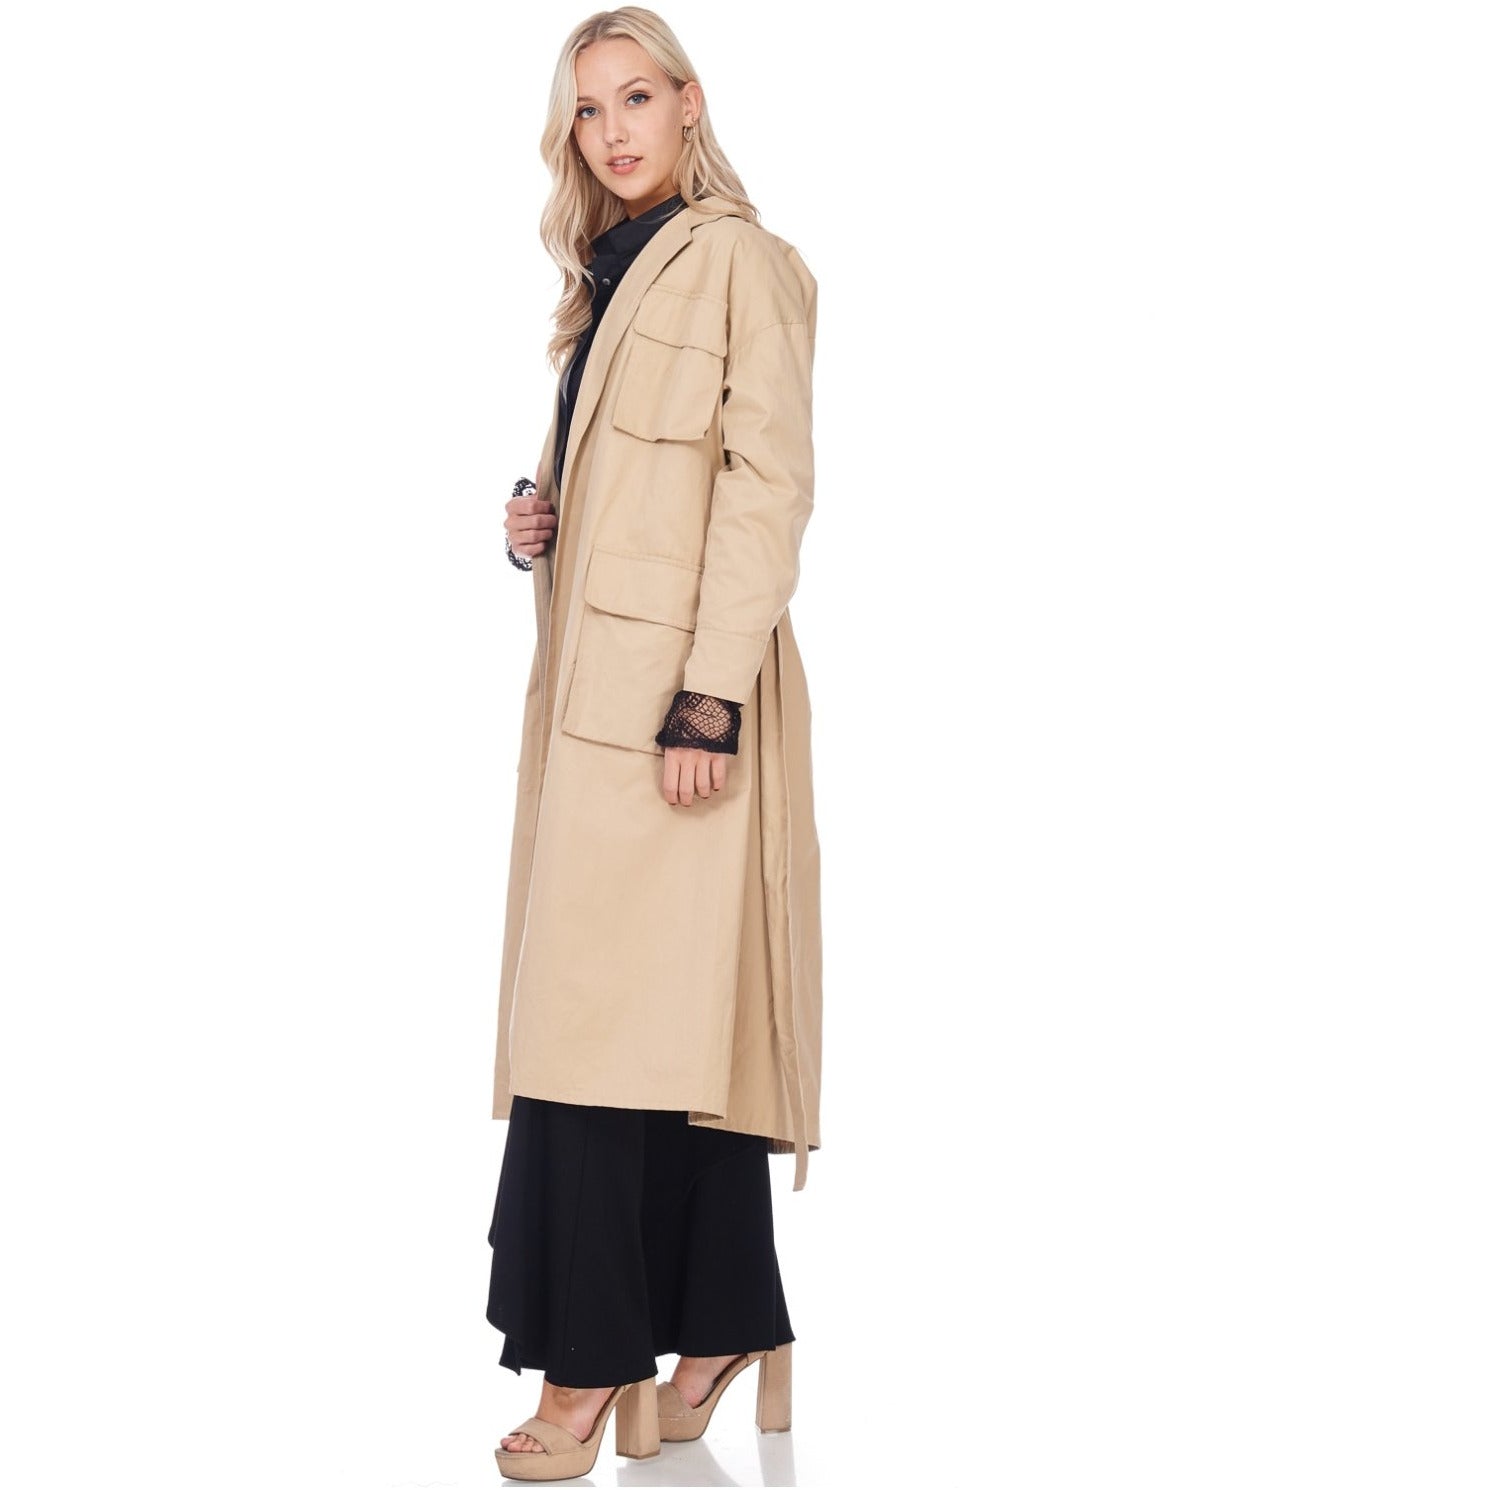 4 Pocket Columbo Style Ladies Trench Coat (Beige) - Ariya's Apparel